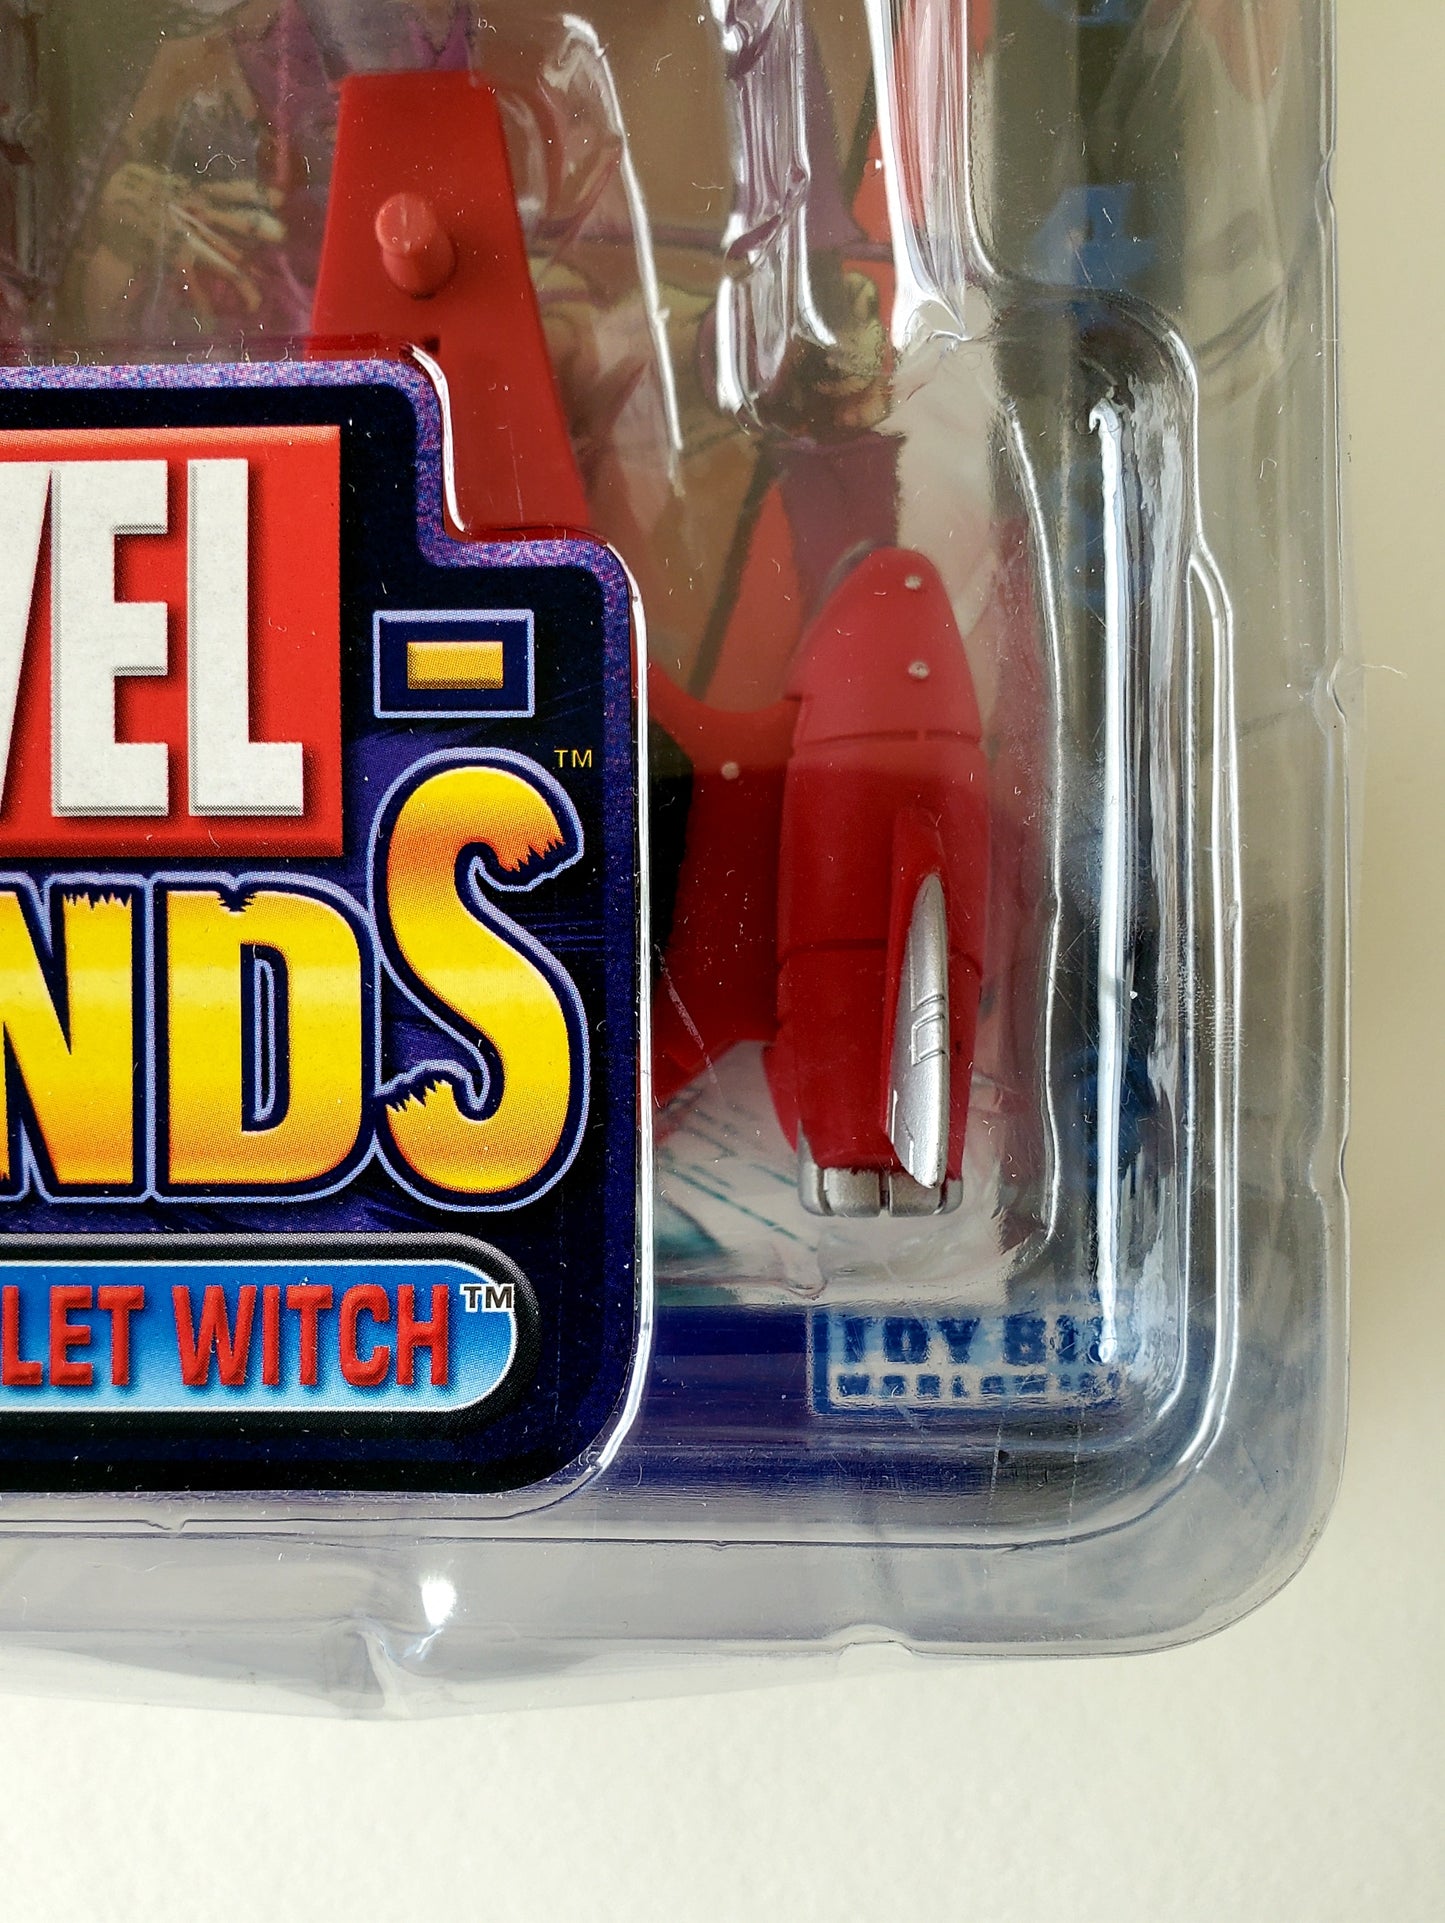 Marvel Legends Legendary Rider Series Scarlet Witch 6-Inch Action Figure